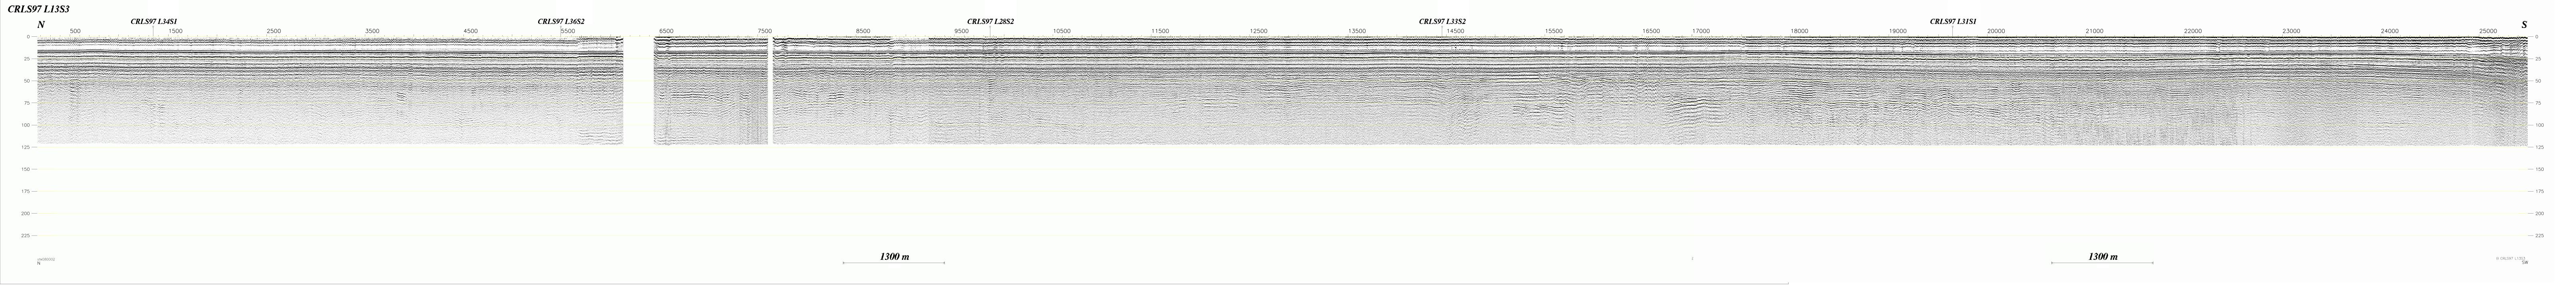 Seismic Reflection Profile Line No.: L13s3 (790071 bytes)